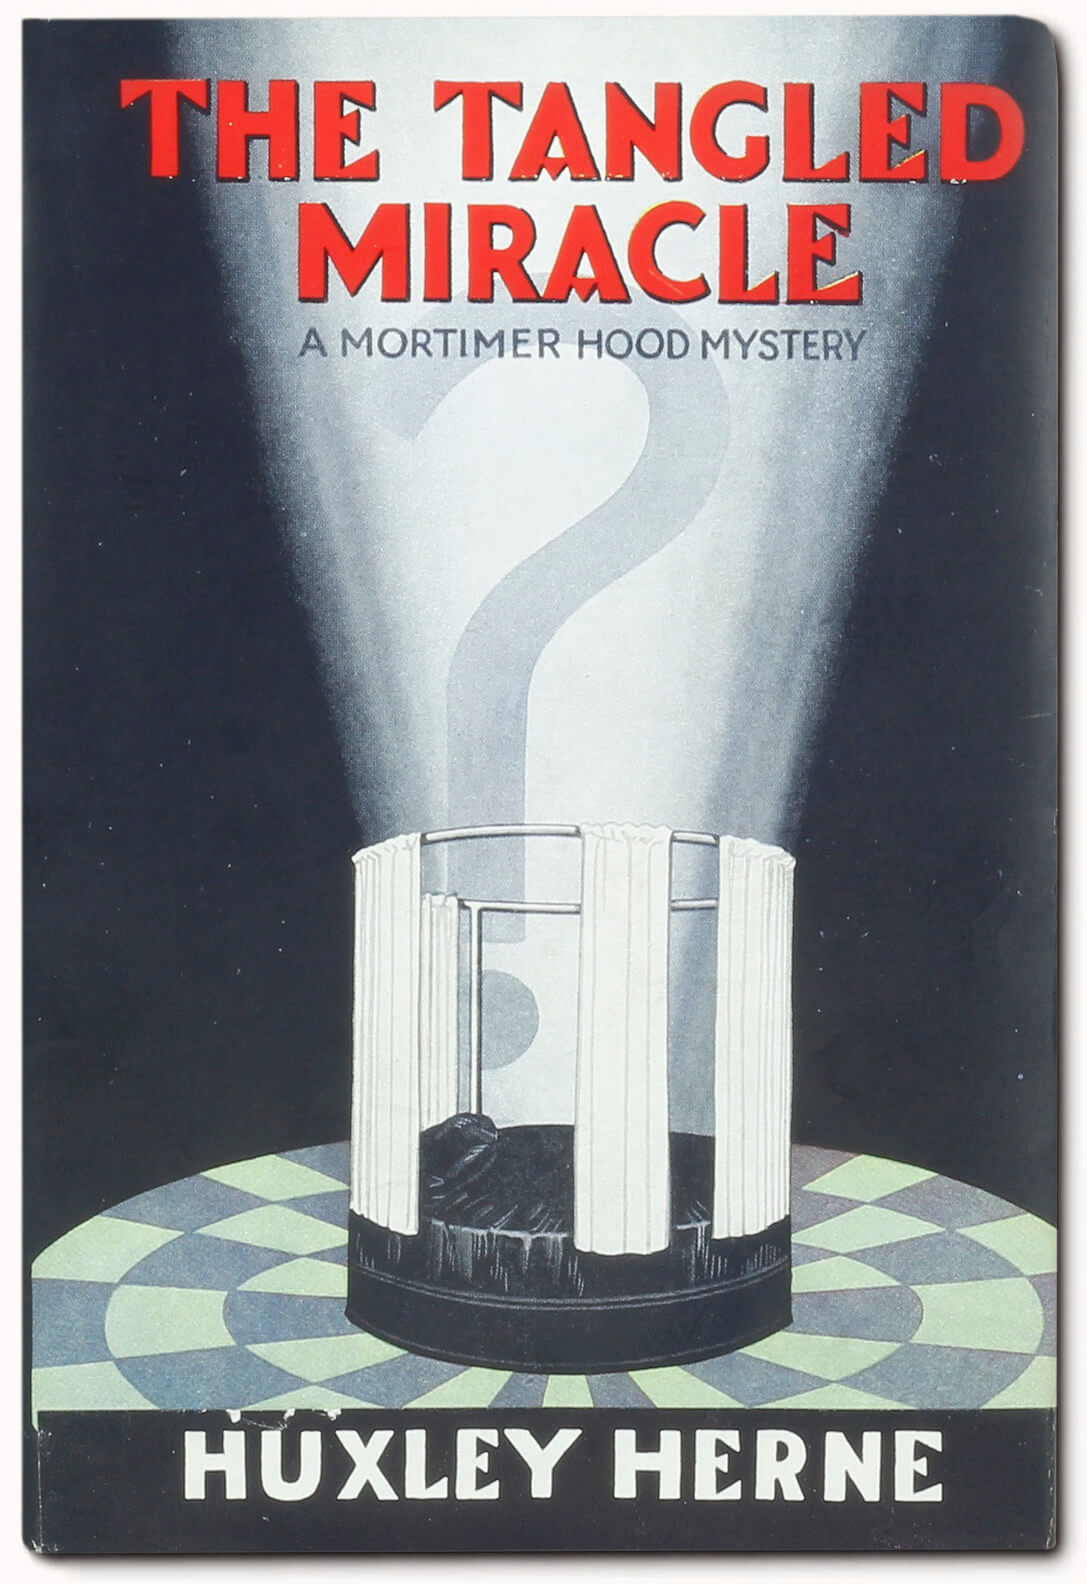 The Tangled Miracle: A Mortimer Hood Mystery de Bertram Brooker, publié sous le nom Huxley Herne, Royaume-Uni, Thomas Nelson & Sons, 1936